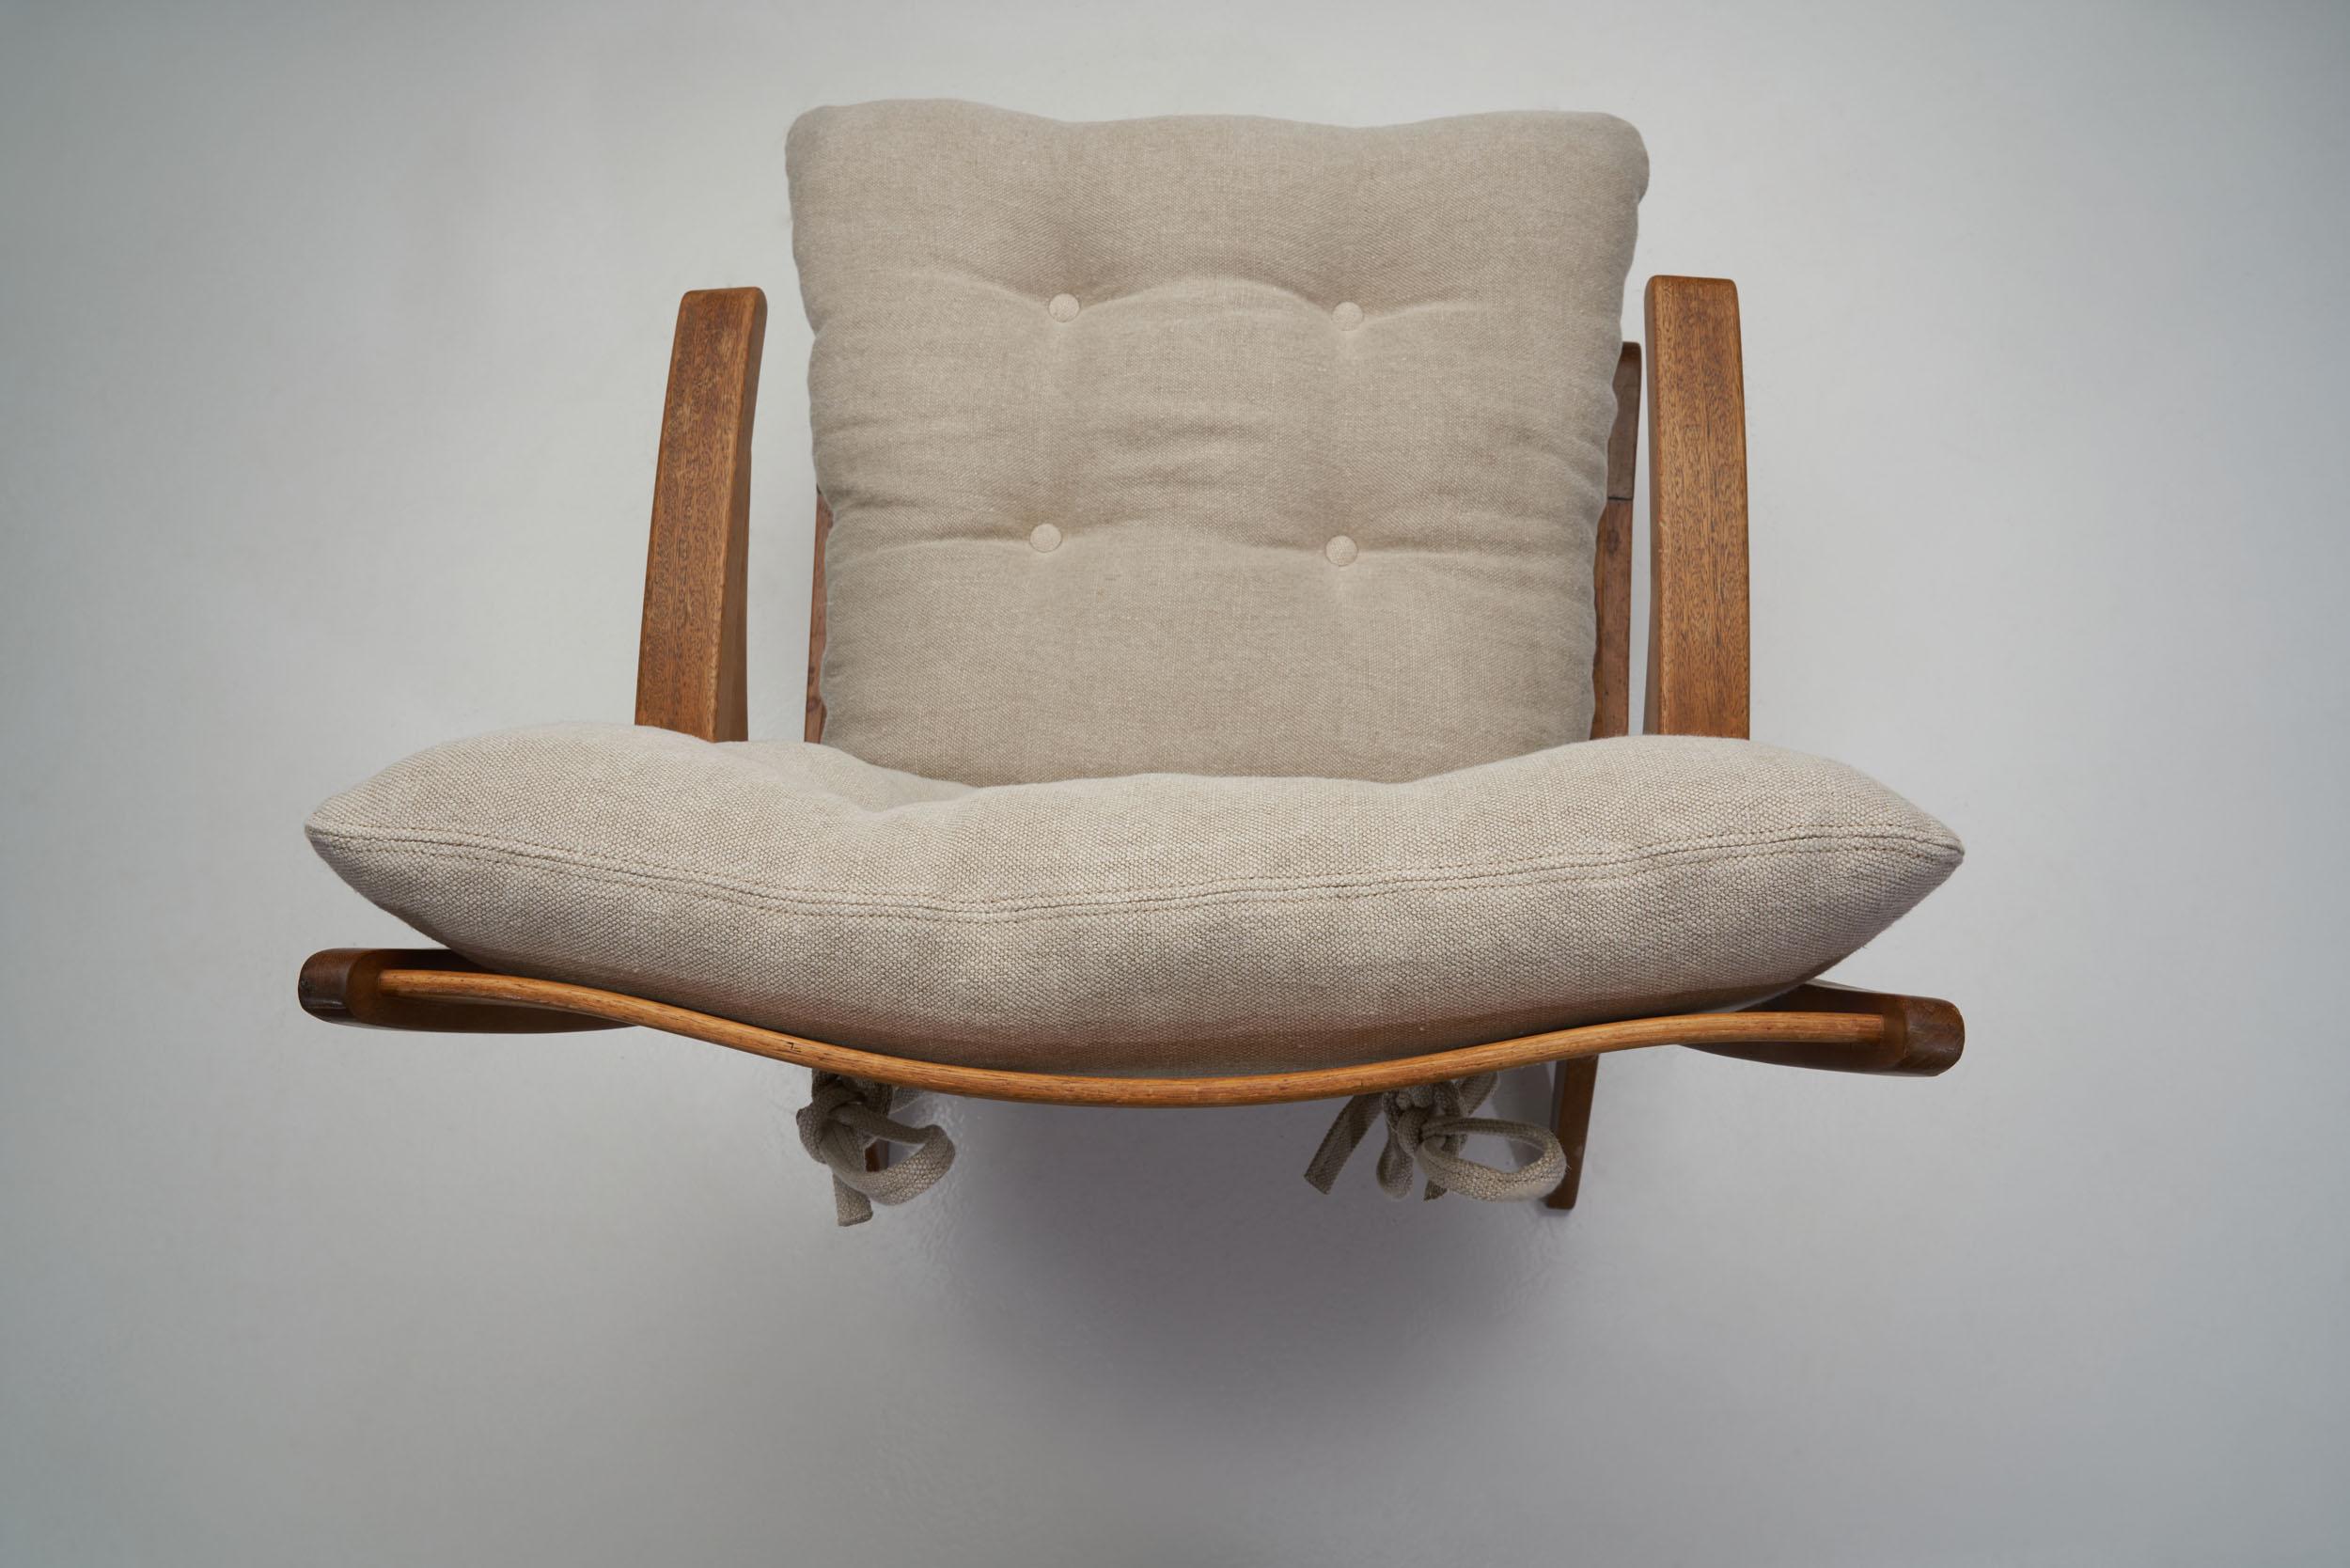 Fabric Dutch Modern High Back Chair by Jan den Drijver for De Stijl, The Hague 1950s For Sale